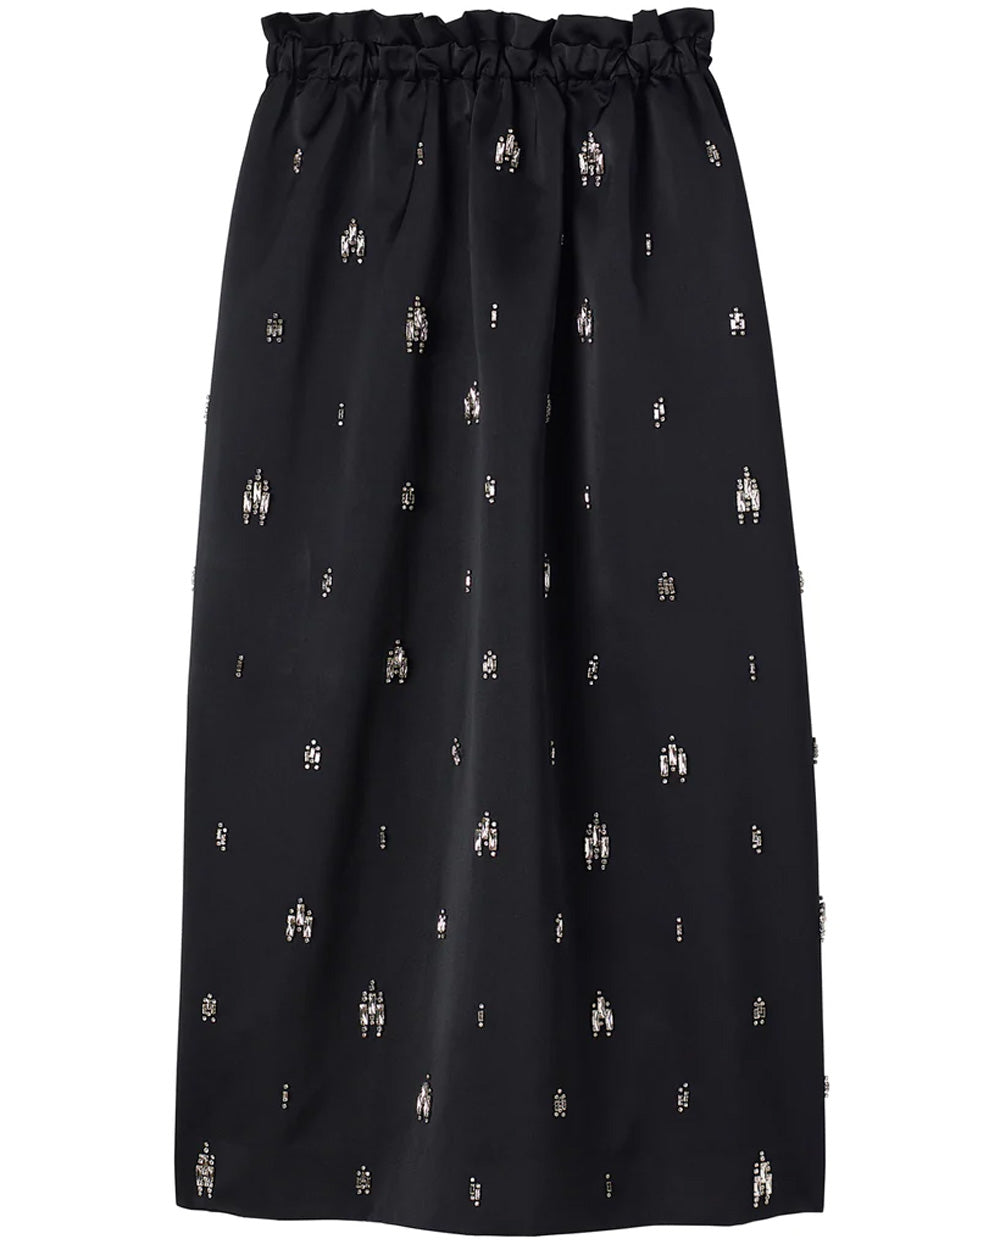 Black Embellished Alexia Skirt